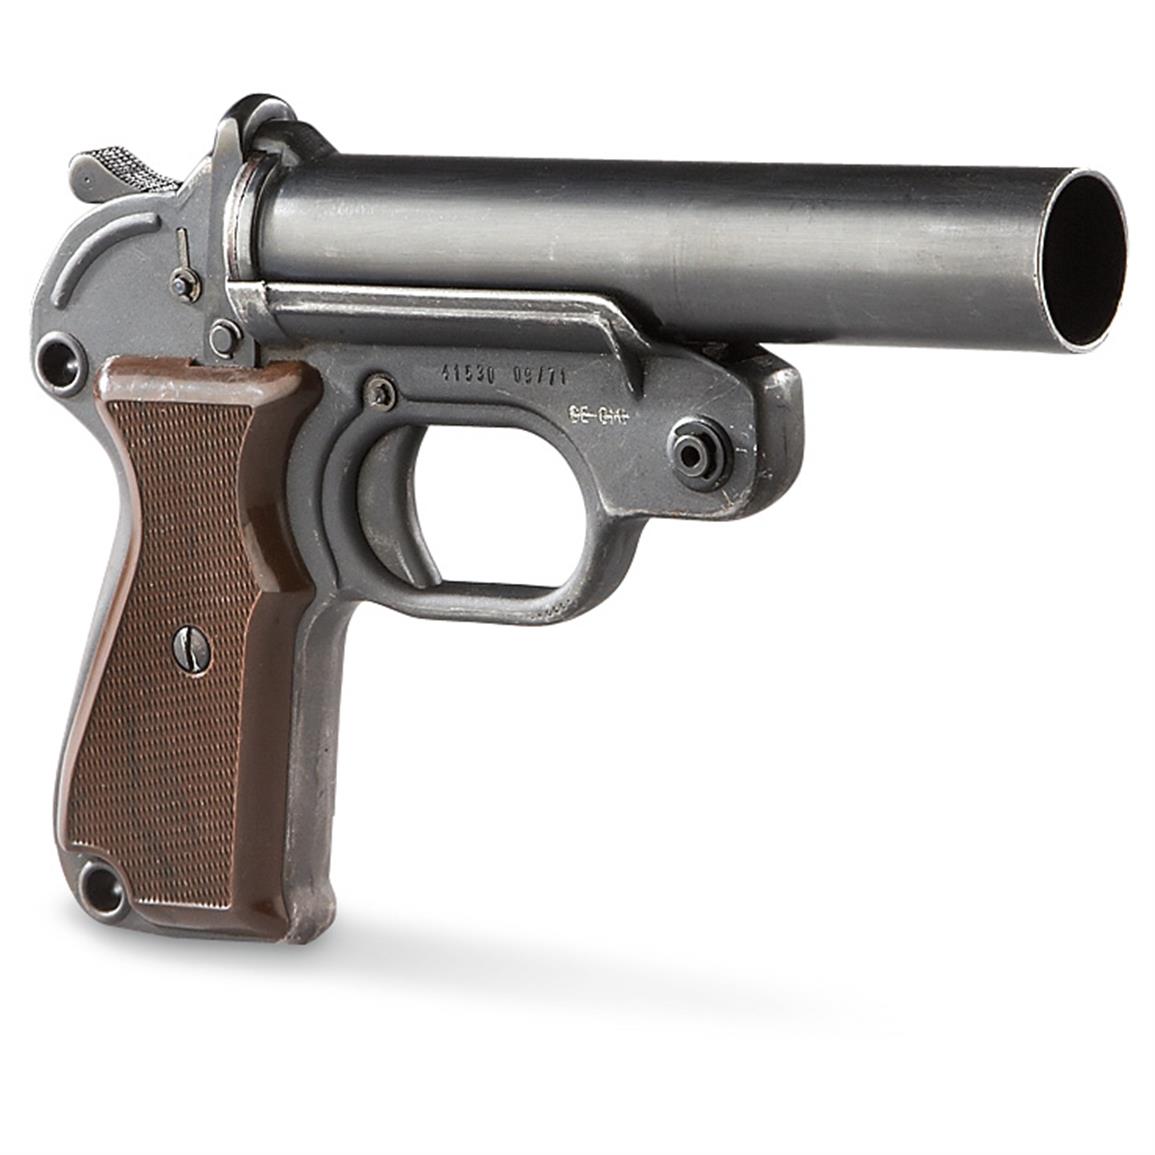 Used German Military Surplus Geco Flare Gun 623102 Flare Guns Accessories At Sportsman S Guide - m9 pistol roblox